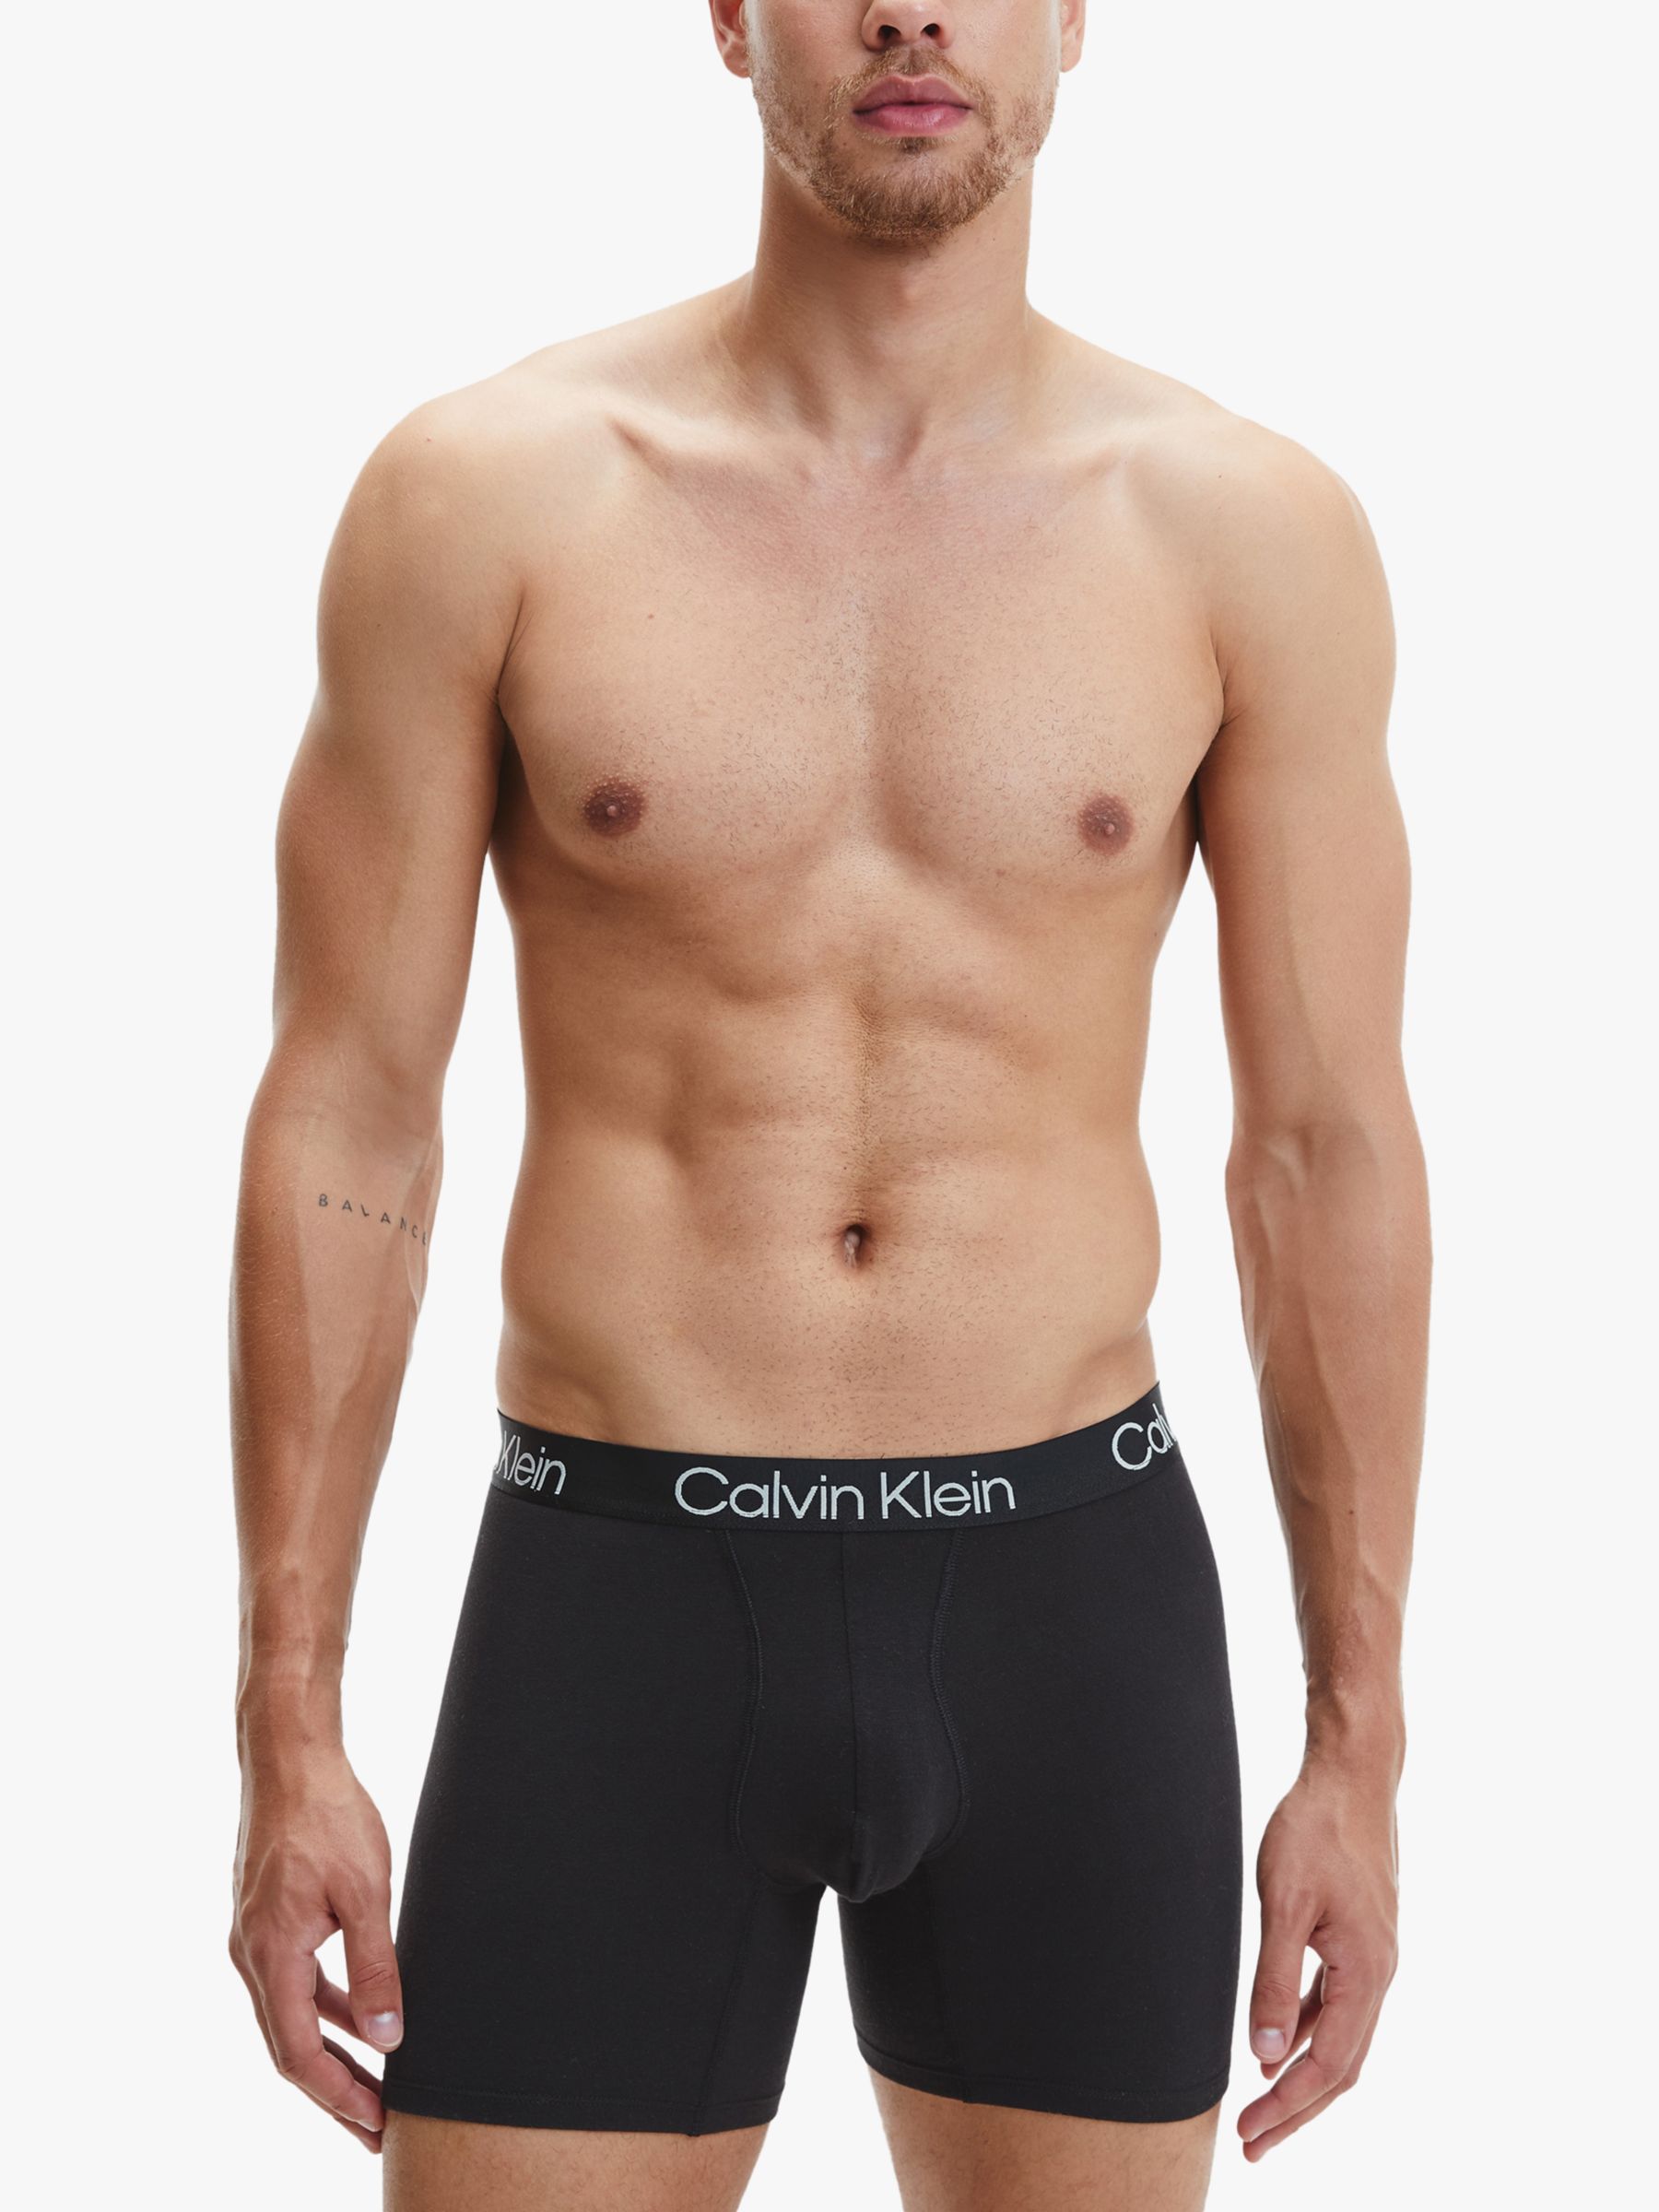 Calvin Klein Cotton Stretch Regular Fit Boxer Briefs, Pack of 3, Black at  John Lewis & Partners